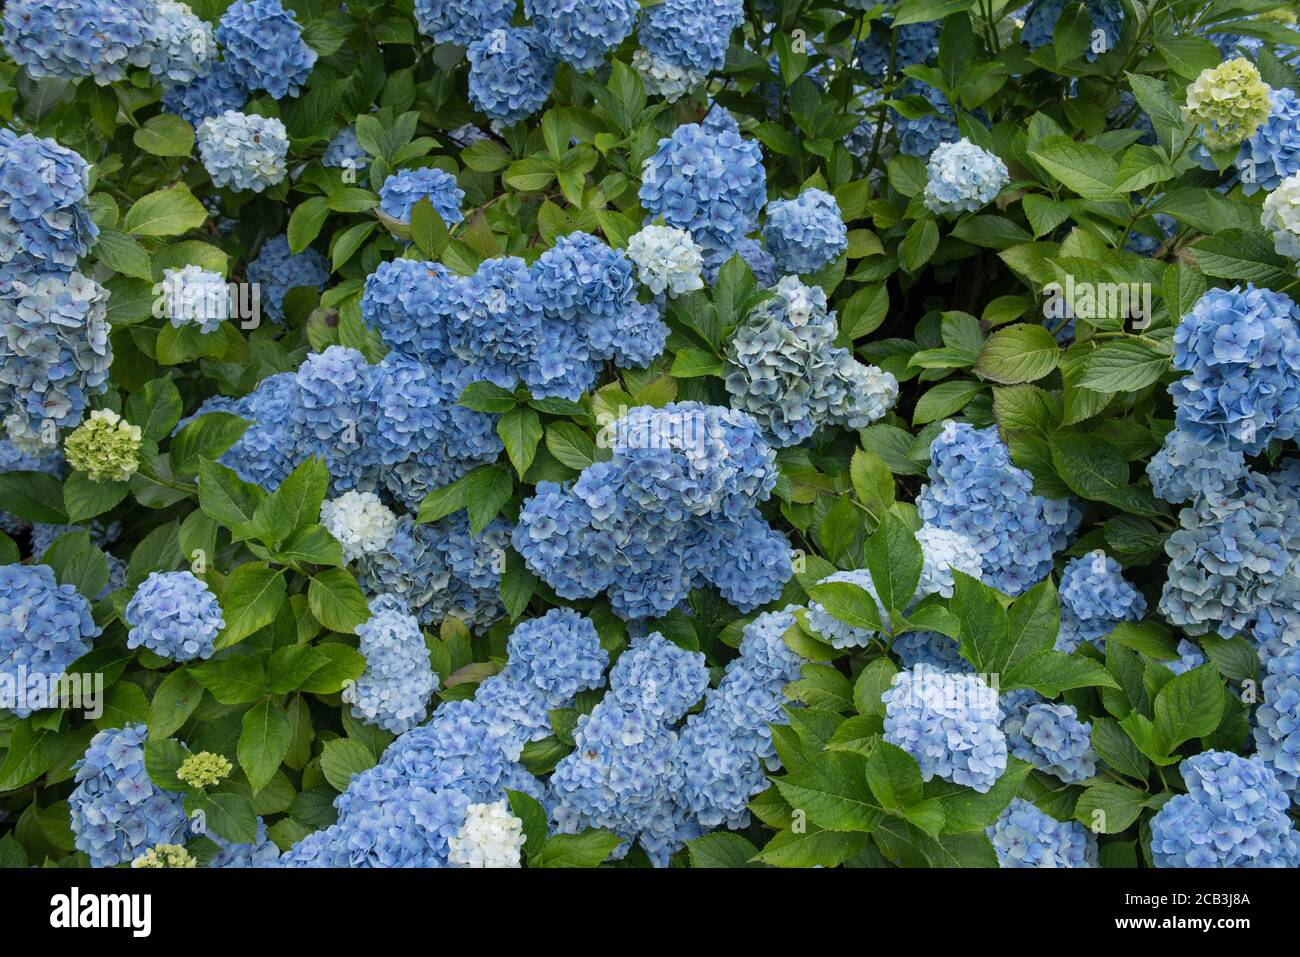 Background or Texture of Summer Flowering Blue Mophead Hydrangea (Hydrangea macrophylla 'Mousseline') in a Woodland Garden in Rural Devon, England, UK Stock Photo